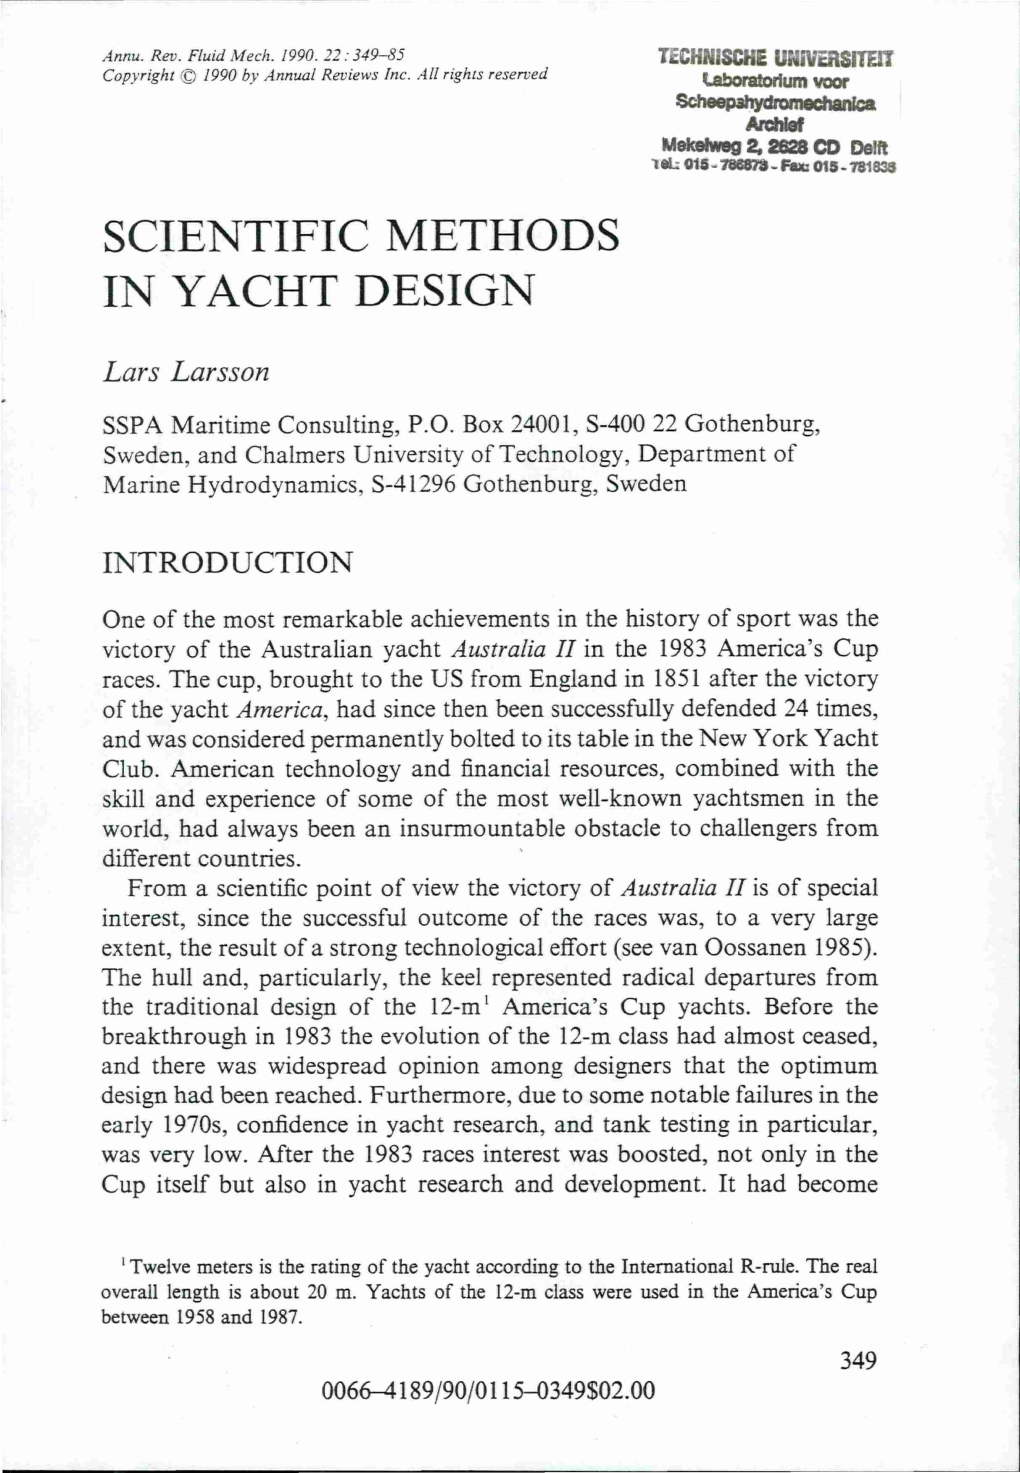 Scientific Methods in Yacht Design